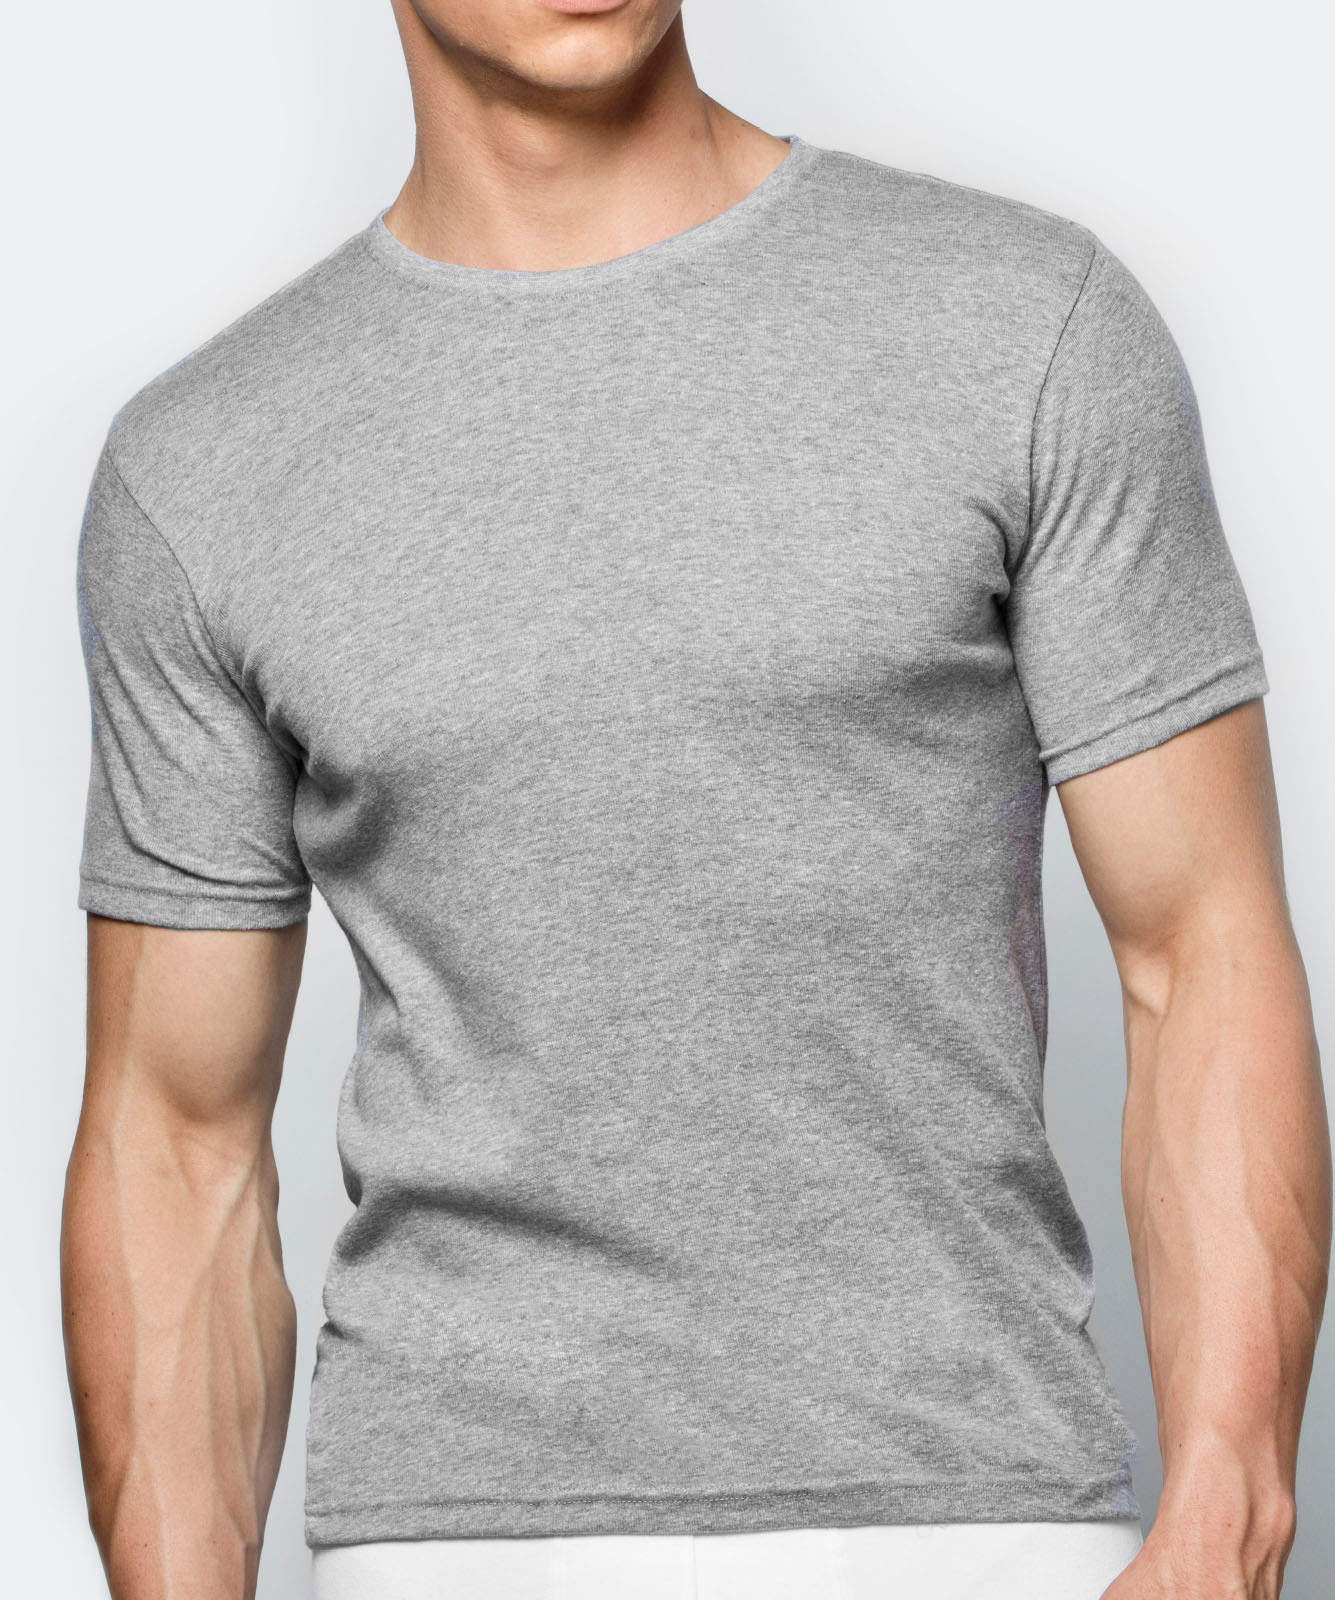 Men's short sleeve T-shirt ATLANTIC - gray